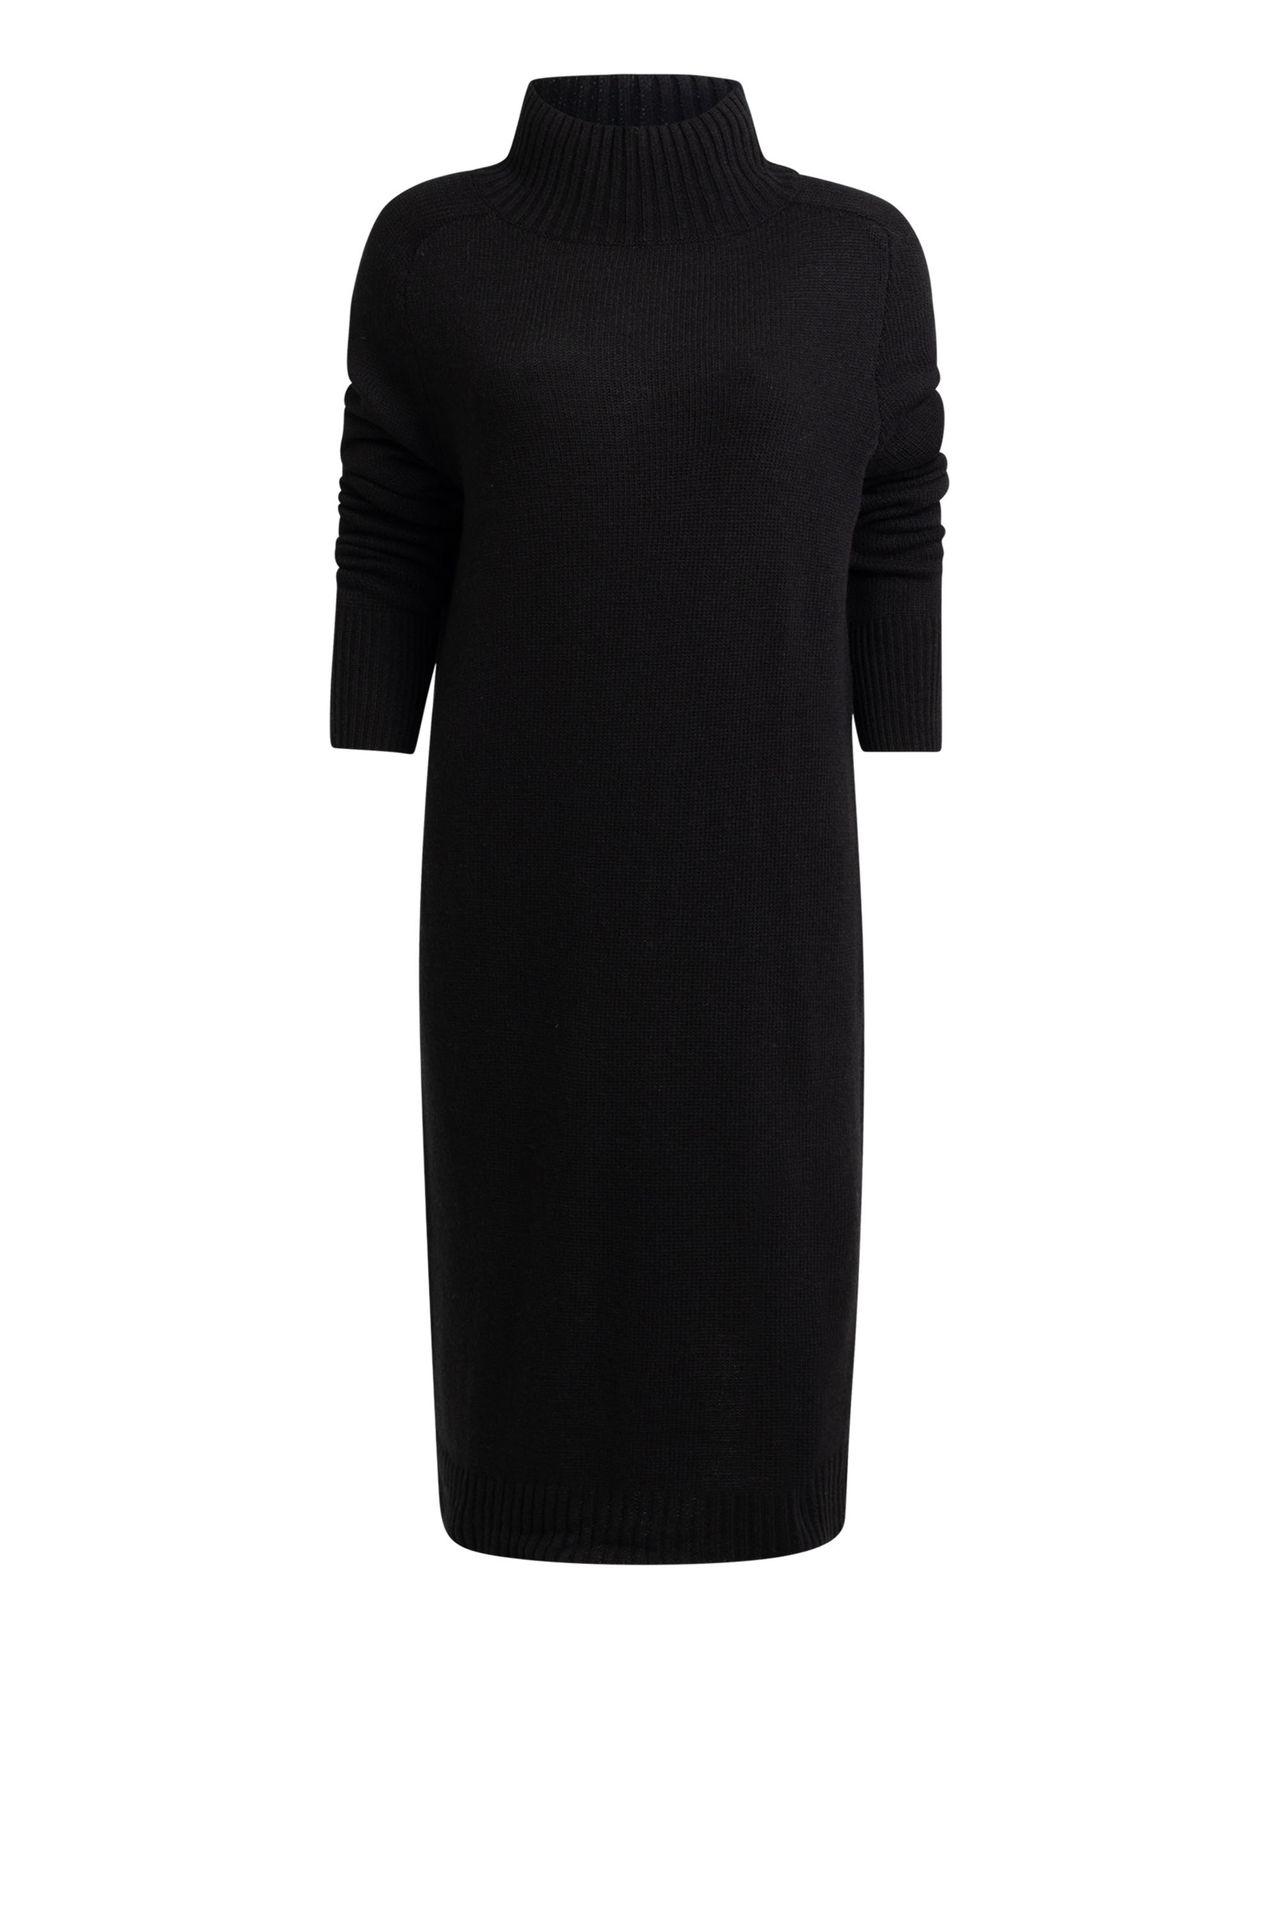  Gebreide jurk zwart black 210622-001-46